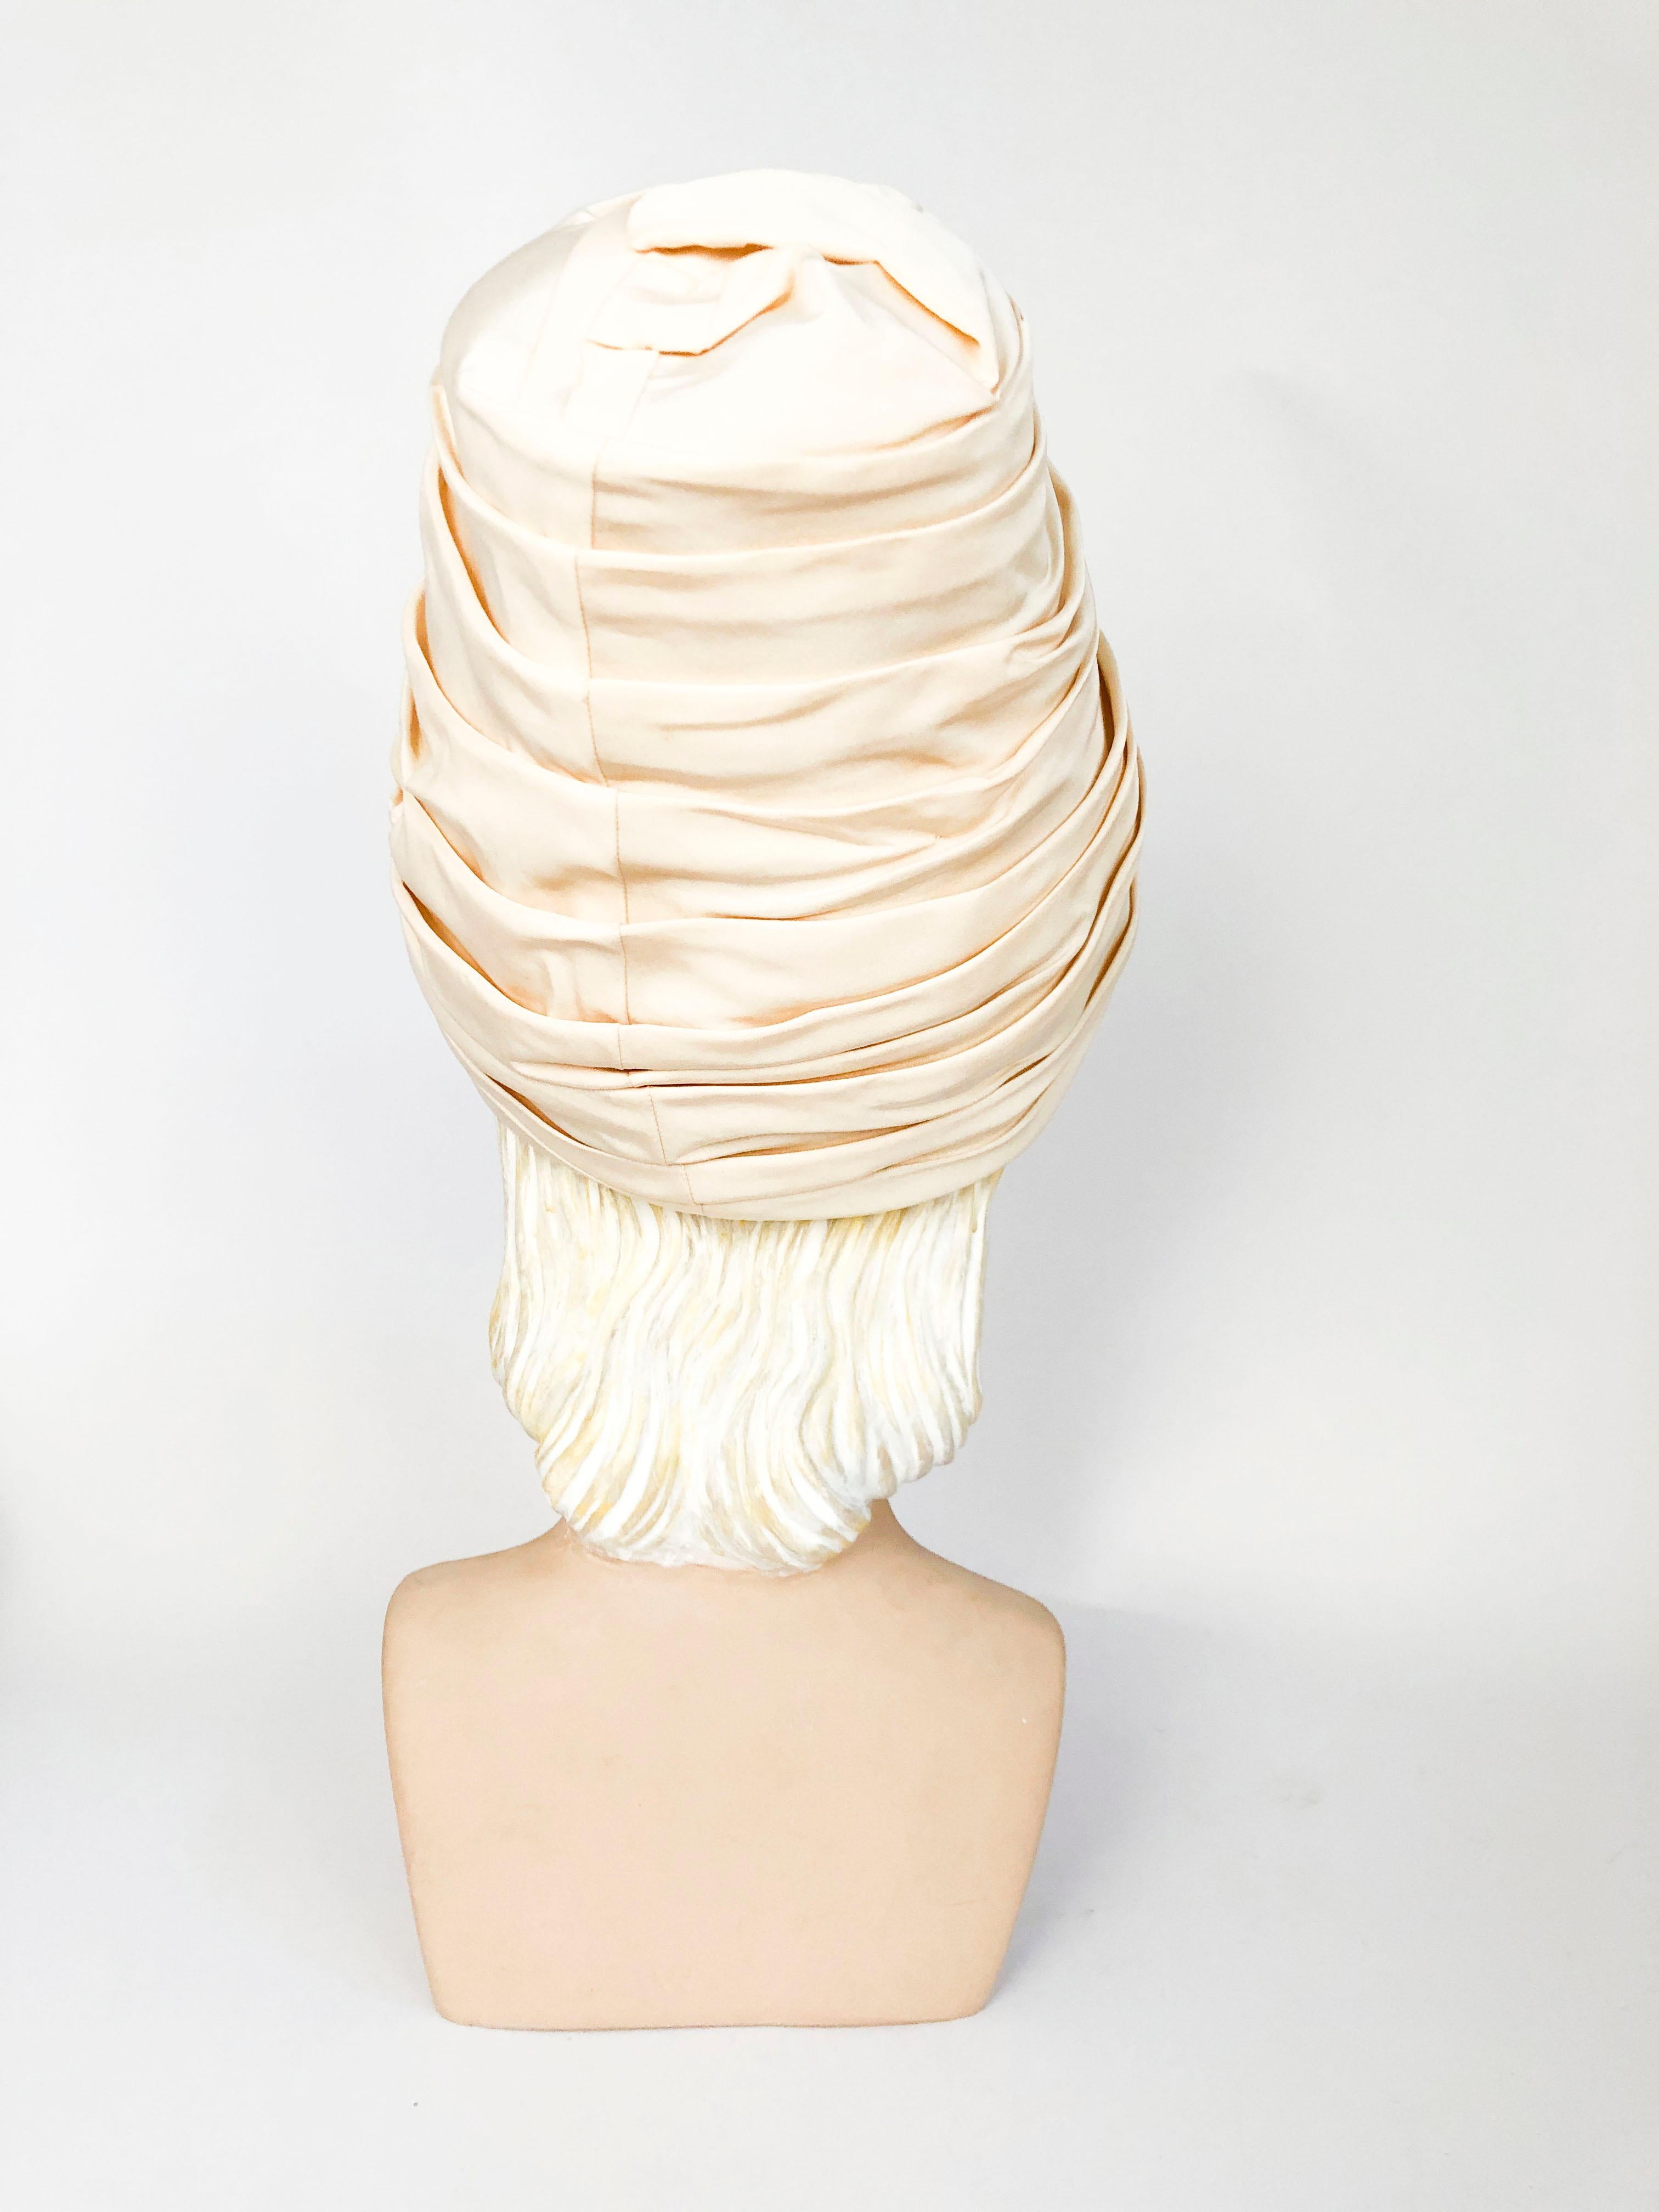 Women's 1950's High-Fashion Structured Turban in Cream Bone with Rhinestone Accent